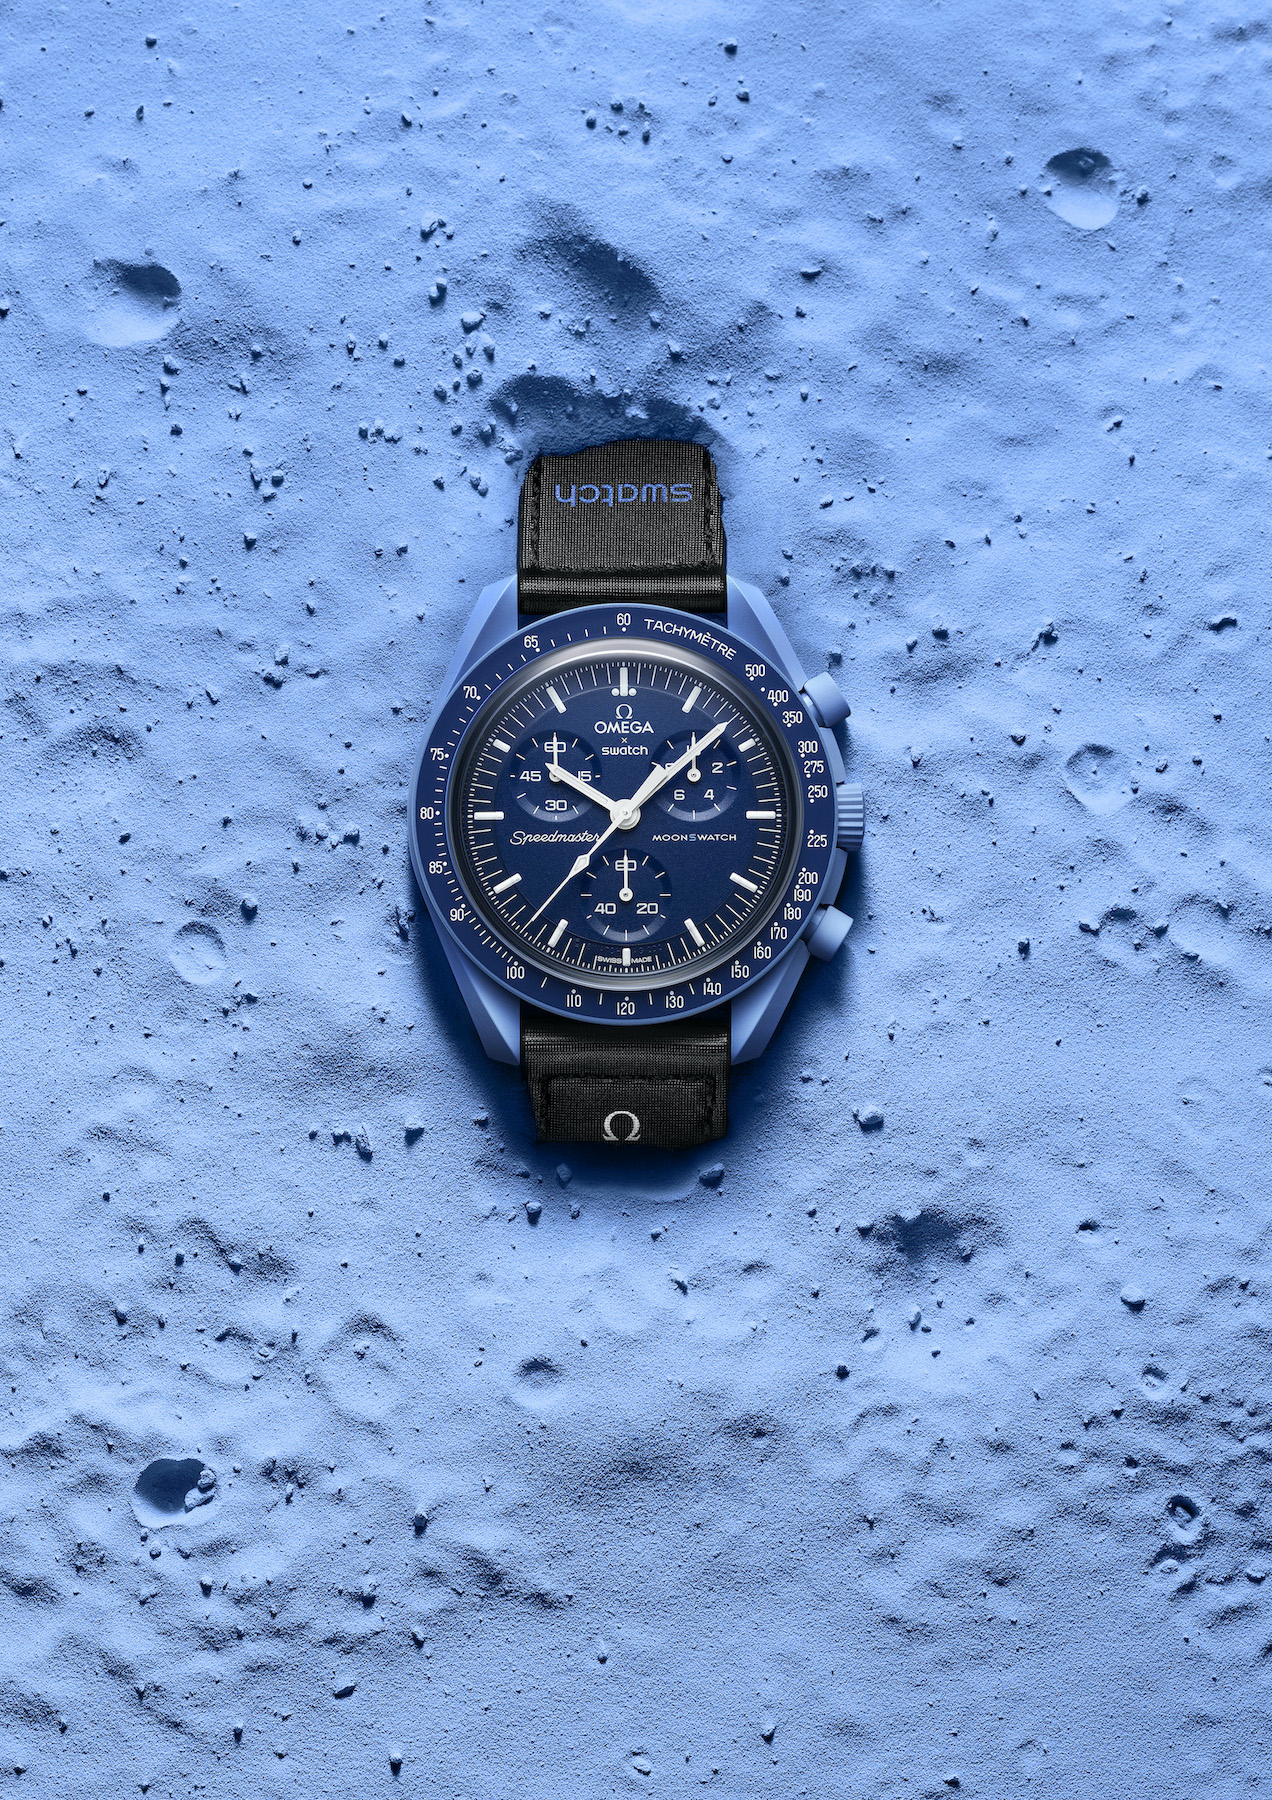 Omega x Swatch Bioceramic MoonSwatch - another watch magazine